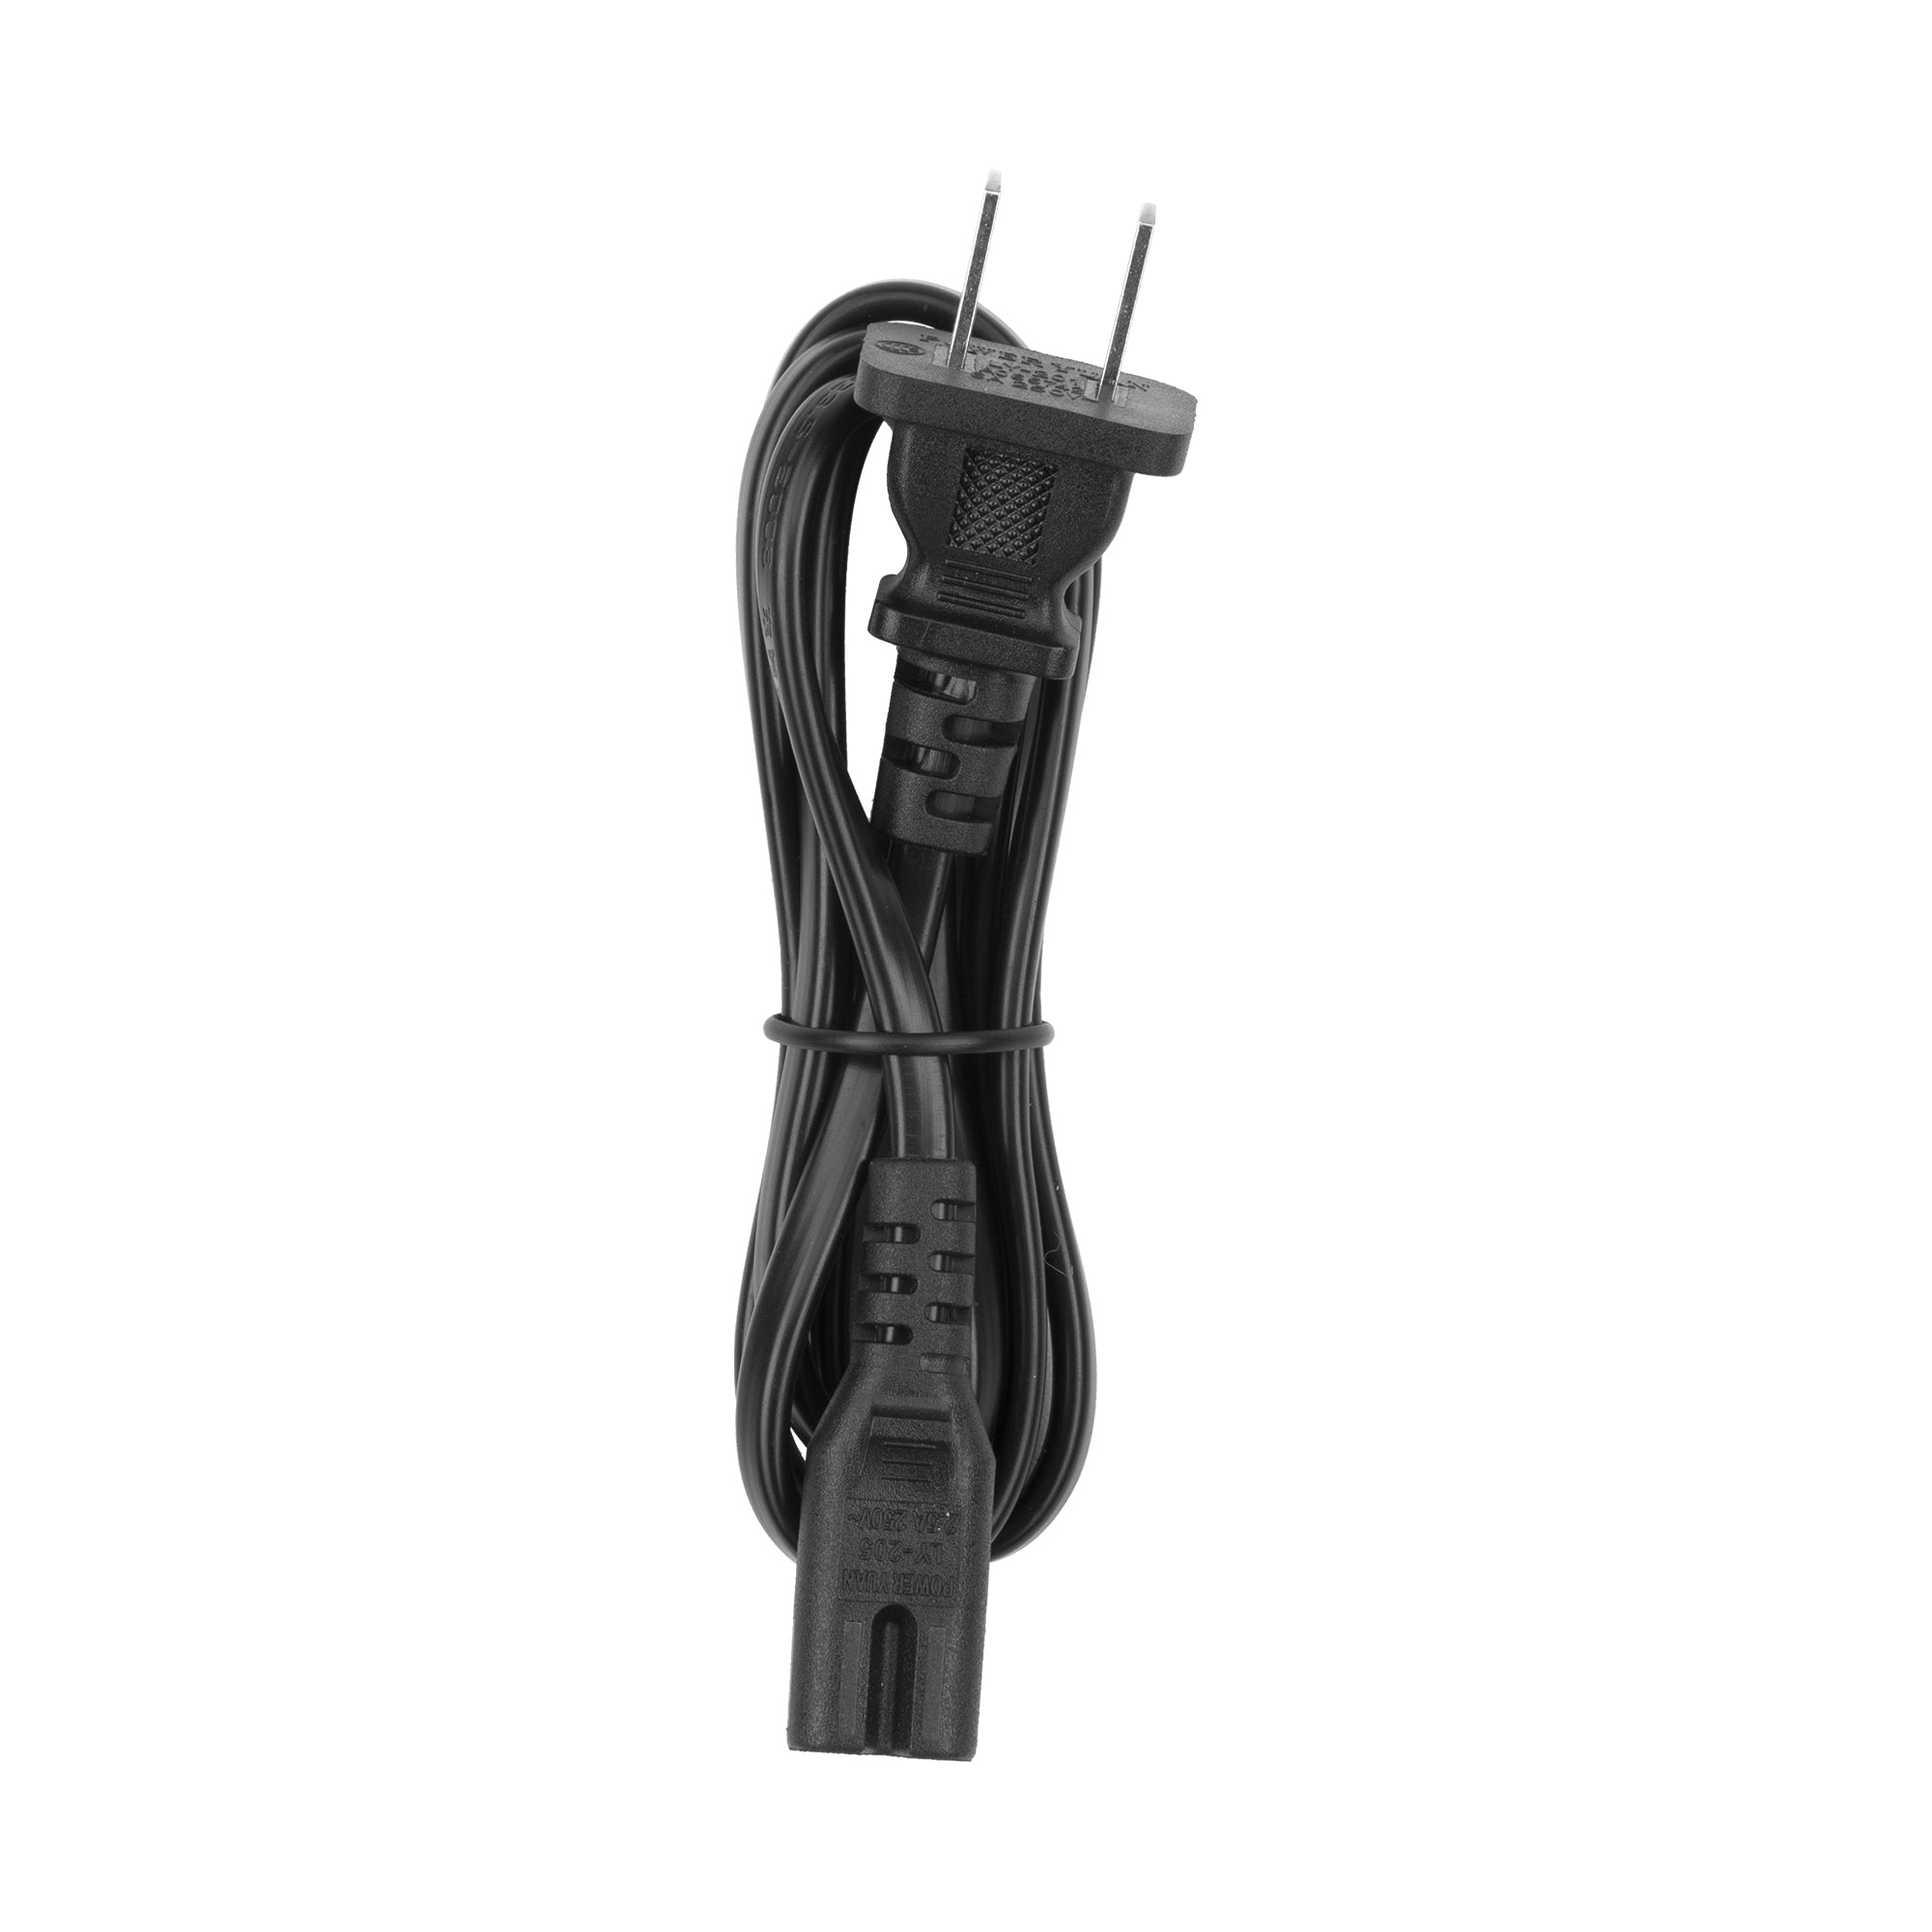 Autel Robotics - EVO Max 4T Batterty Charger + Cable